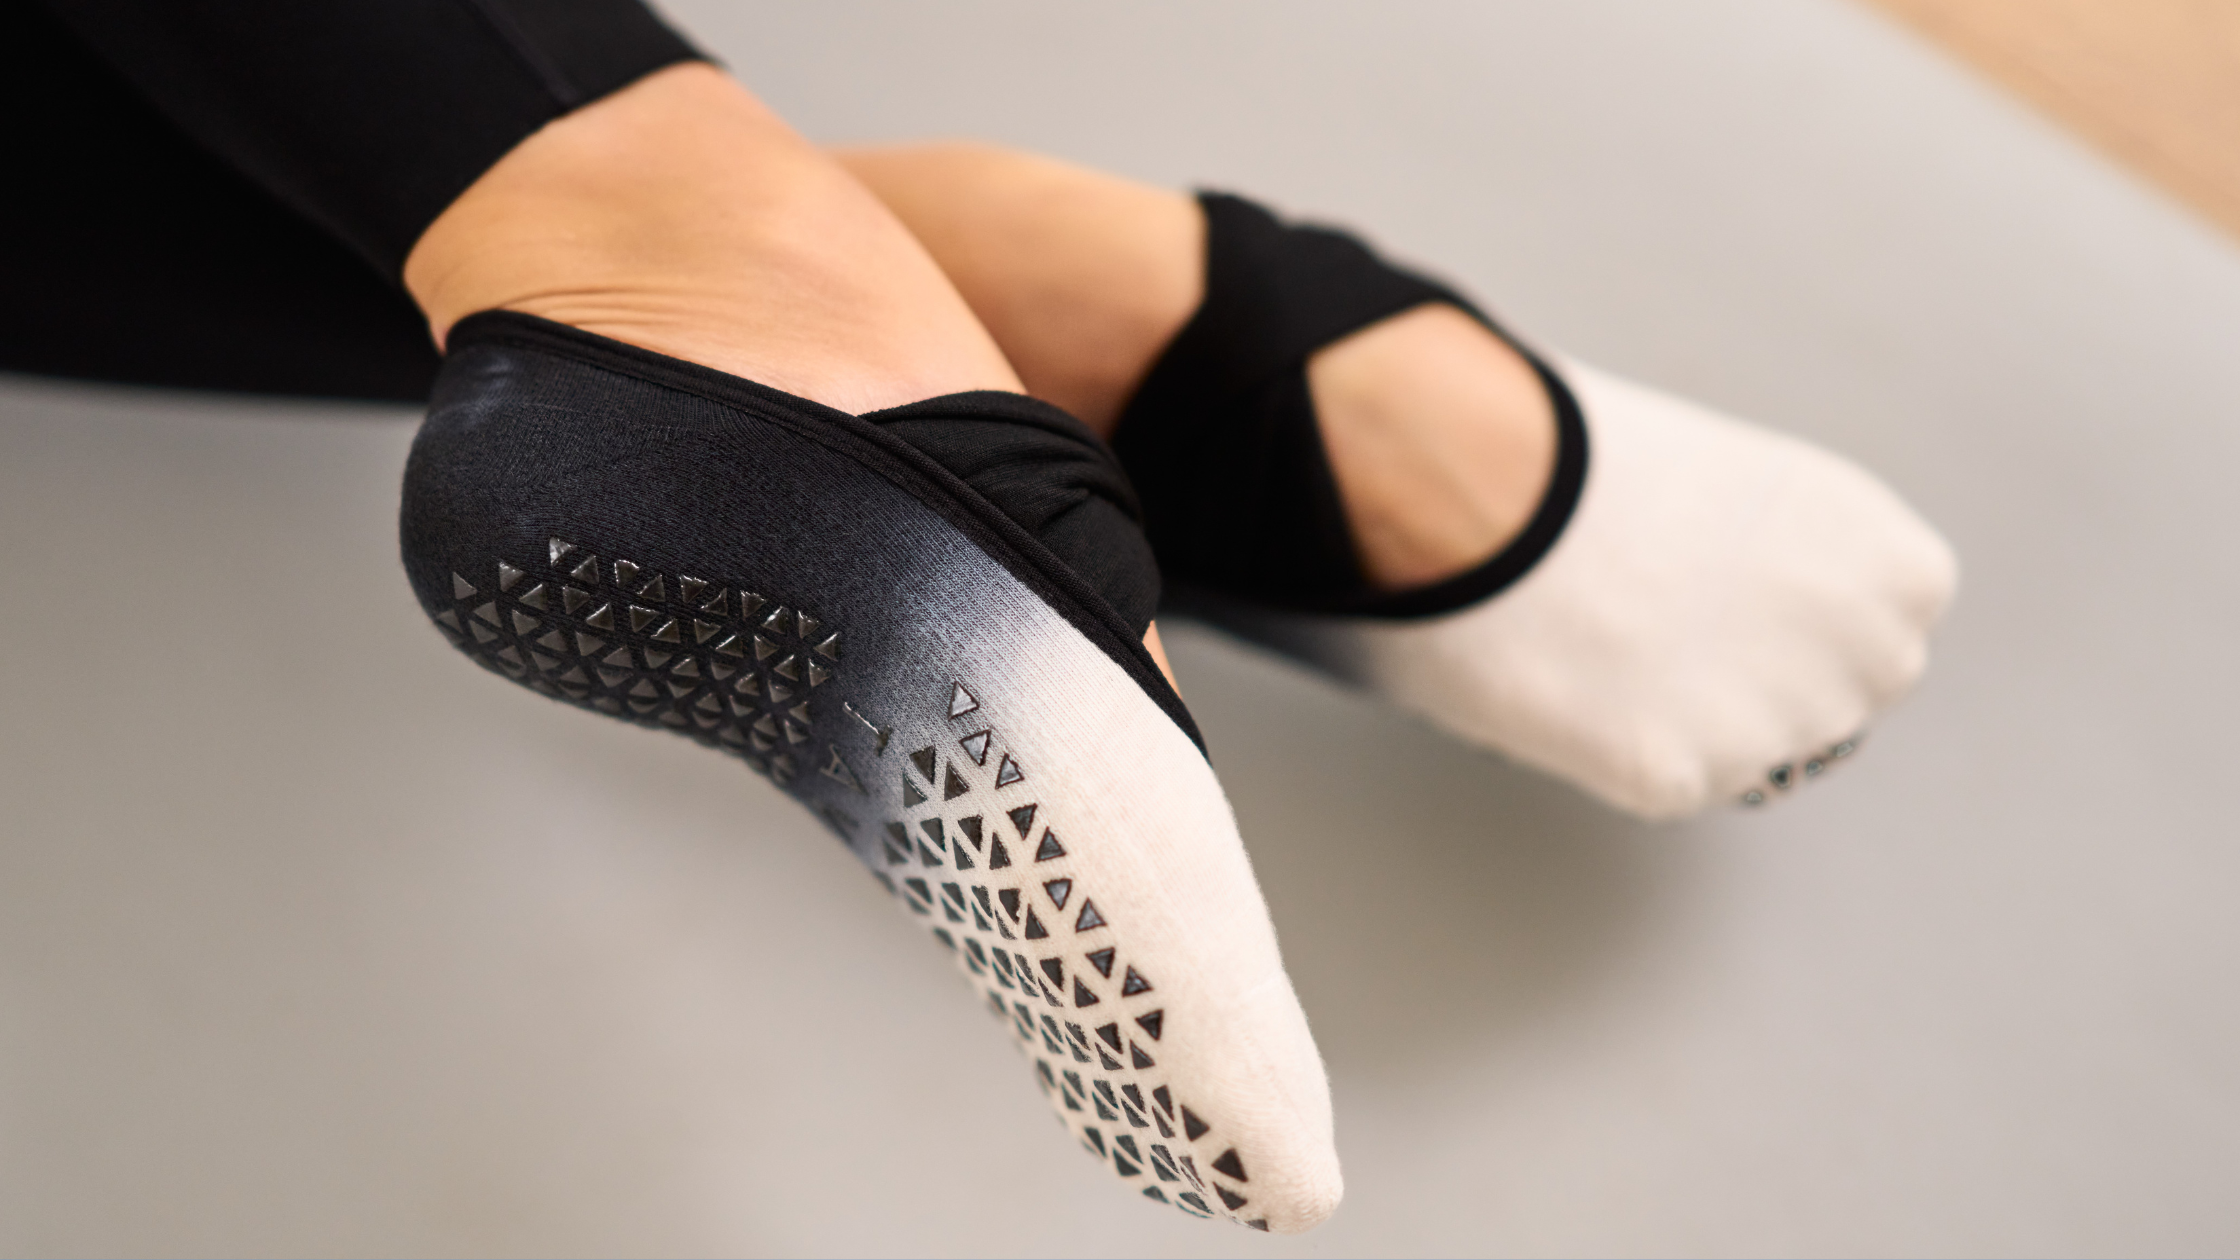 Savvy Grip Socks - Charcoal Leopard (Pilates / Barre)